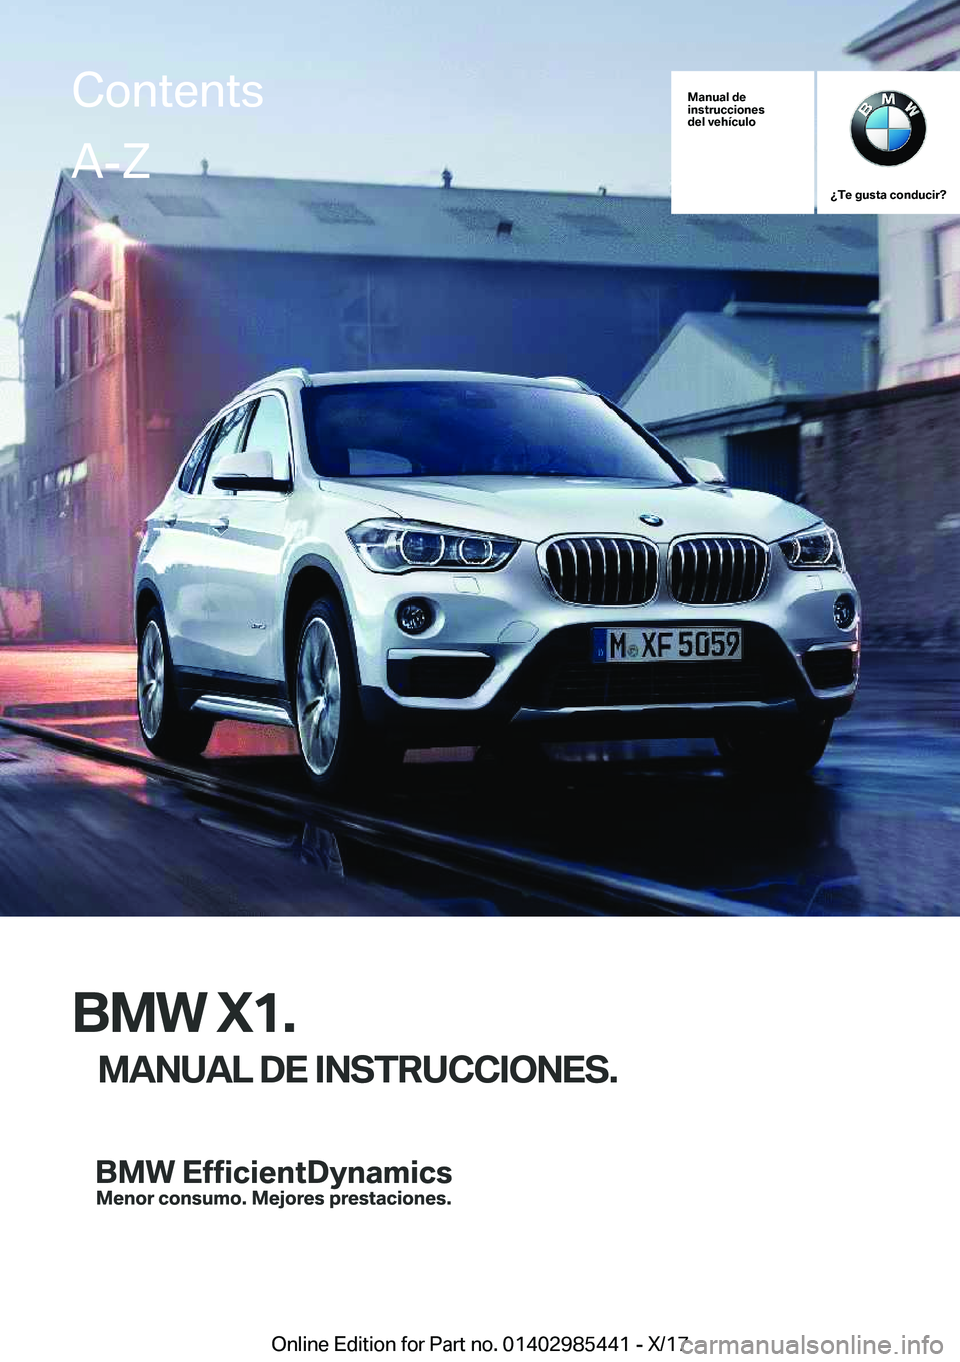 BMW X1 2018  Manuales de Empleo (in Spanish) �M�a�n�u�a�l��d�e
�i�n�s�t�r�u�c�c�i�o�n�e�s
�d�e�l��v�e�h�